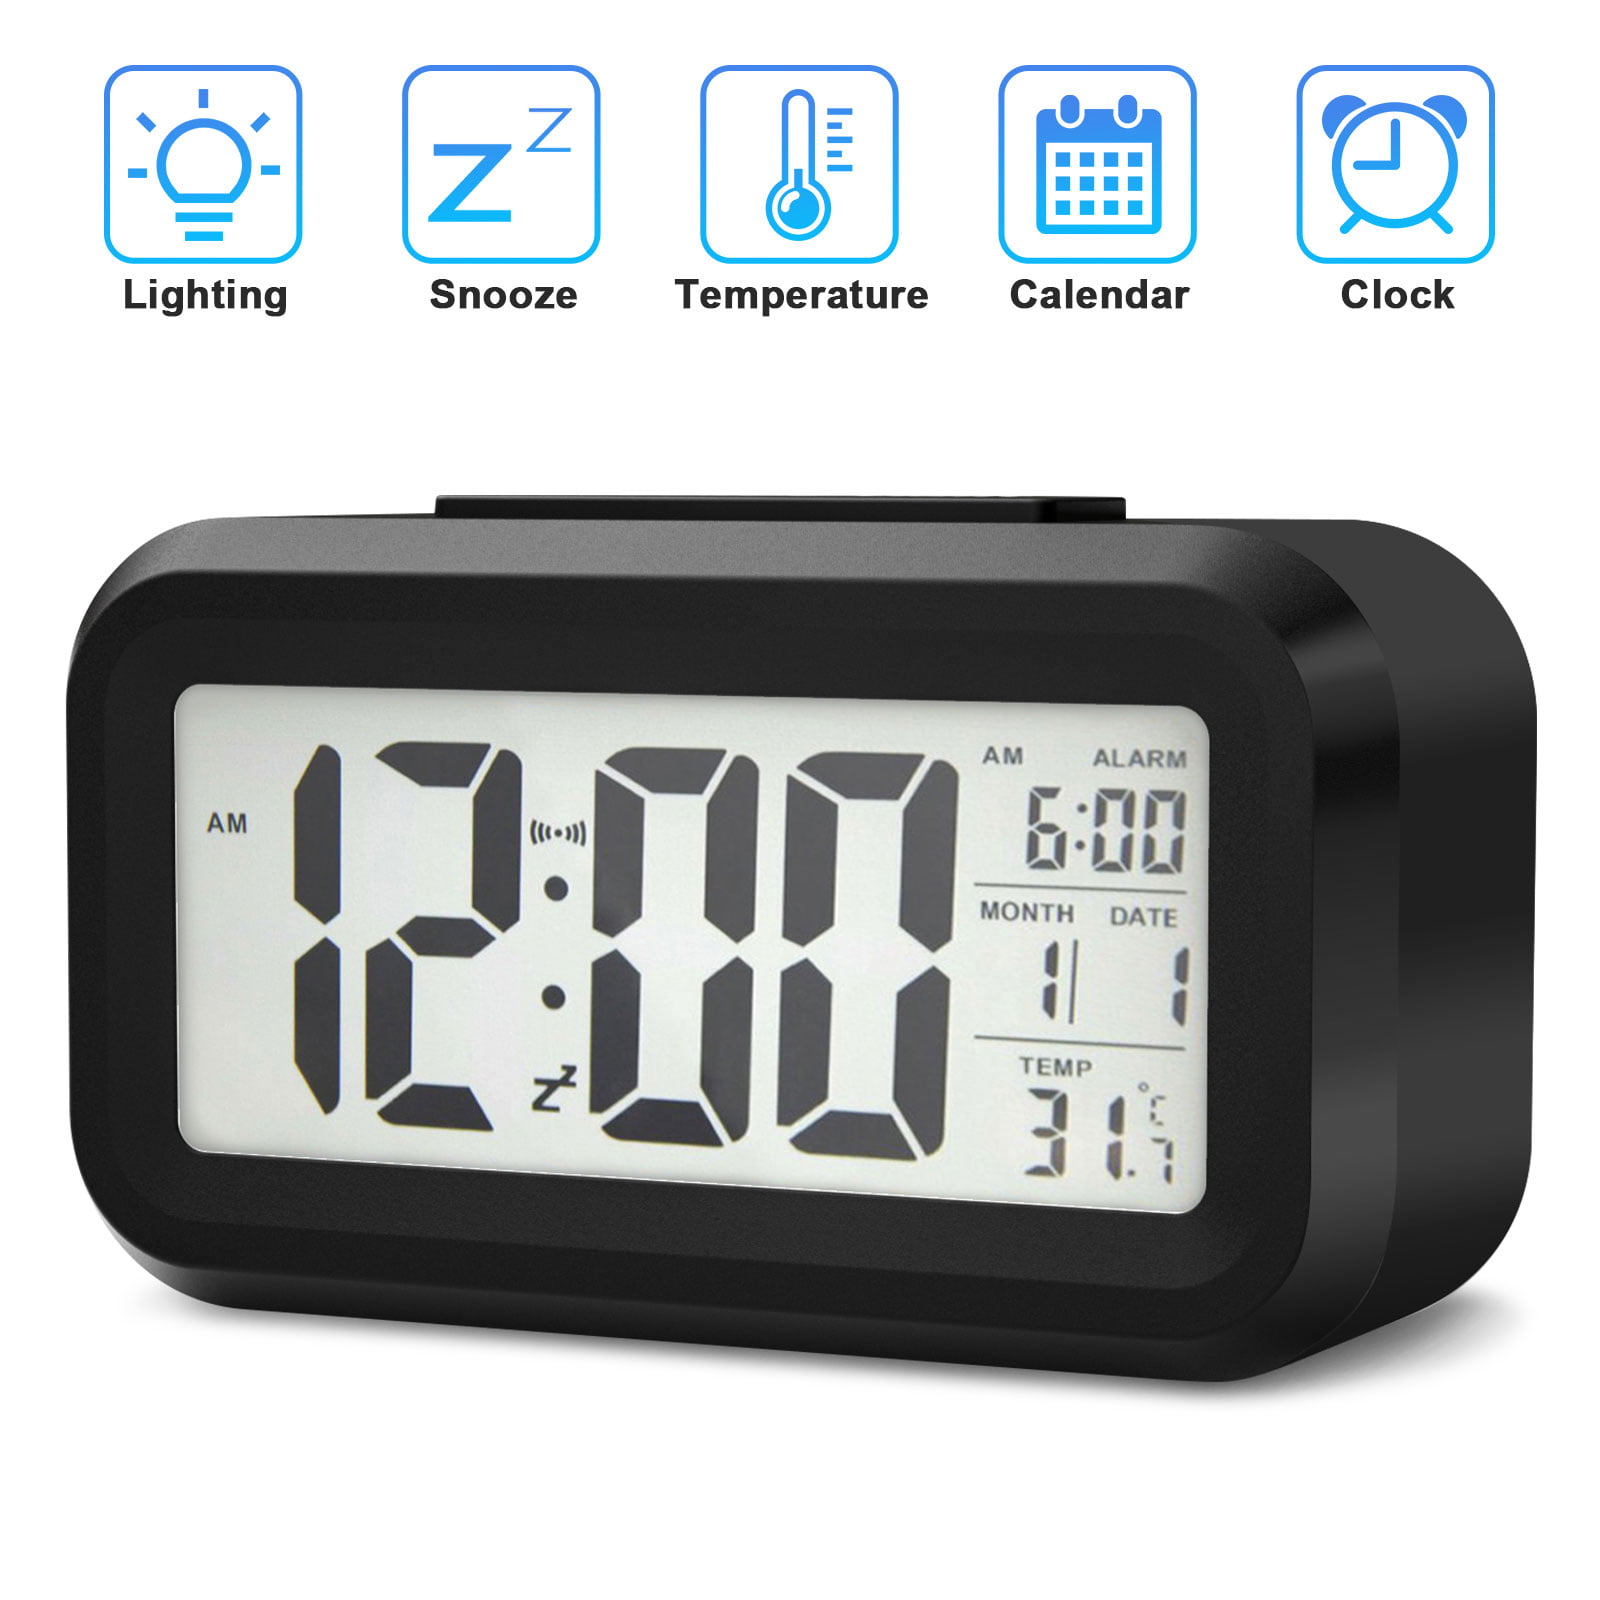 LED Display Backlight Time Meter Snooze Calendar Stopwatch Table Alarm Clock 